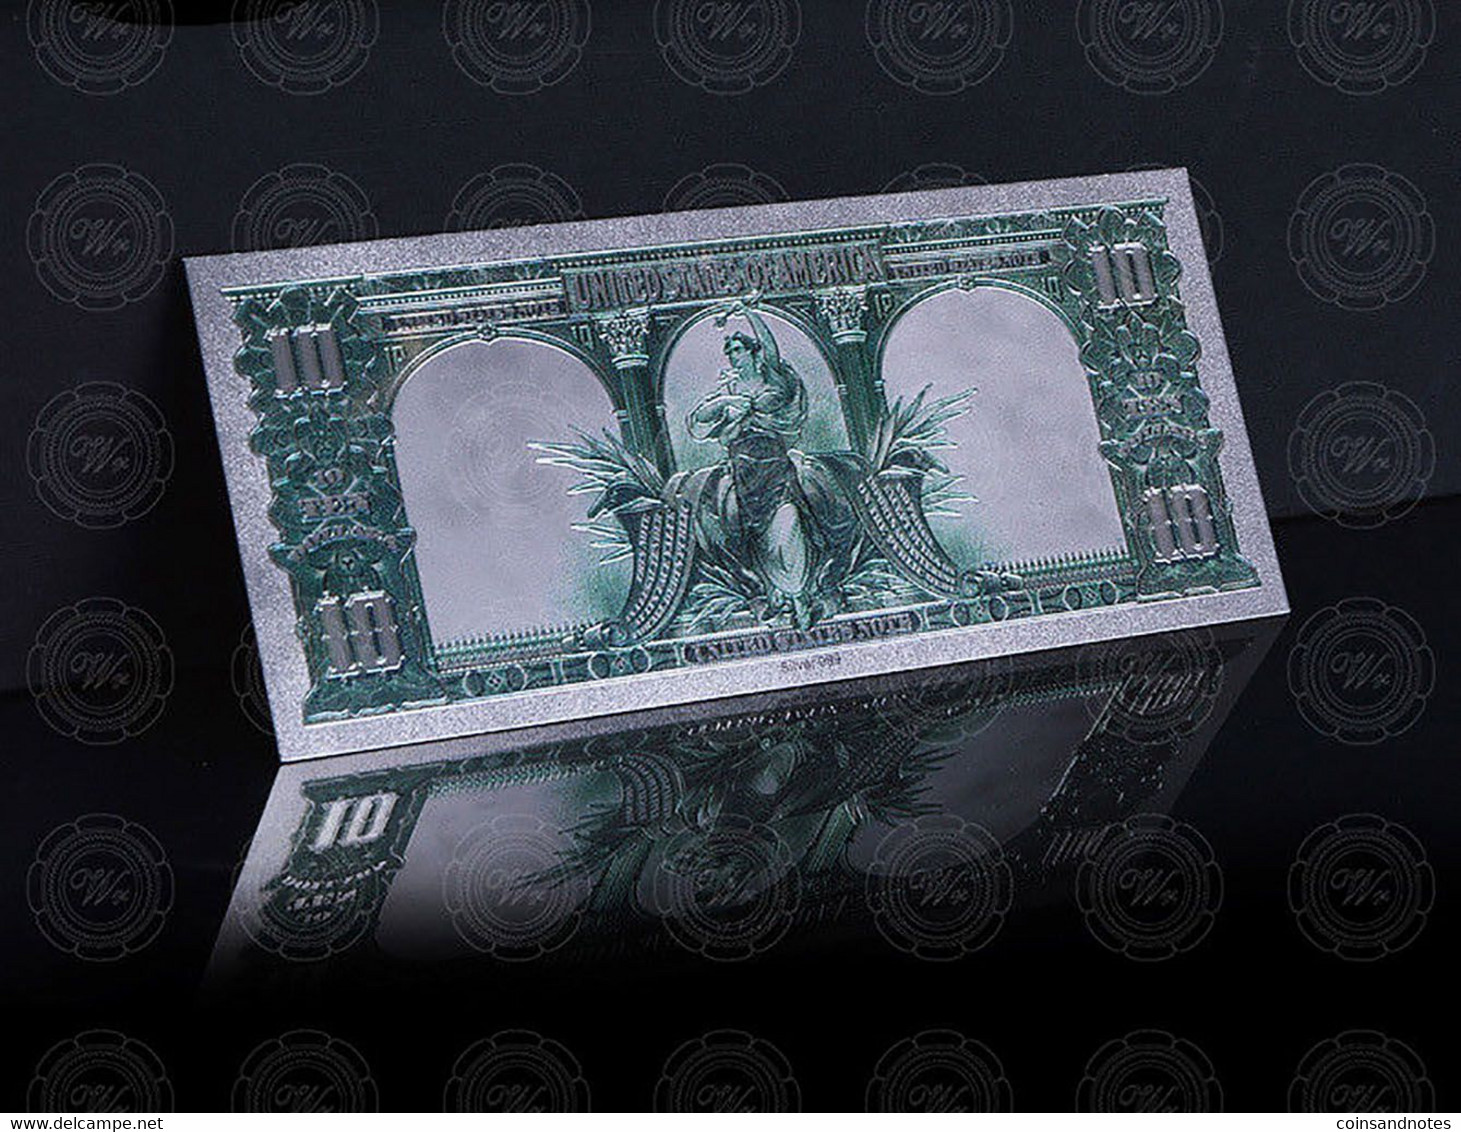 USA - Polymer 10$ 'Bison' Banknote - Completely Silver Laminated - UNC & CRISP - Colecciones Lotes Mixtos